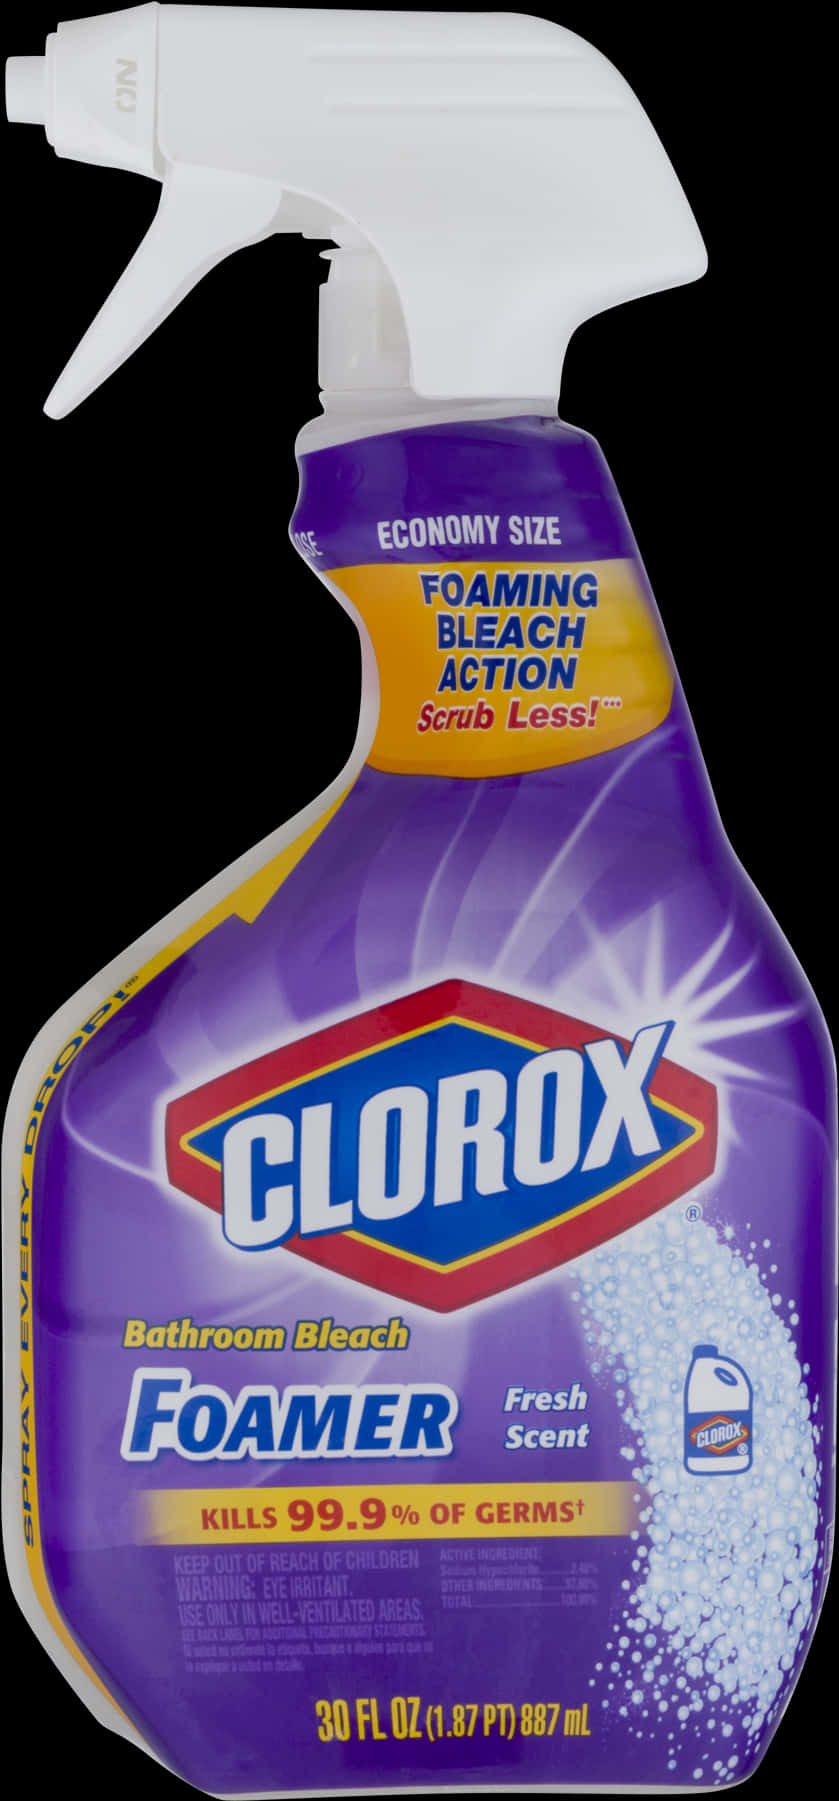 Clorox Bathroom Bleach Foamer Spray Bottle PNG